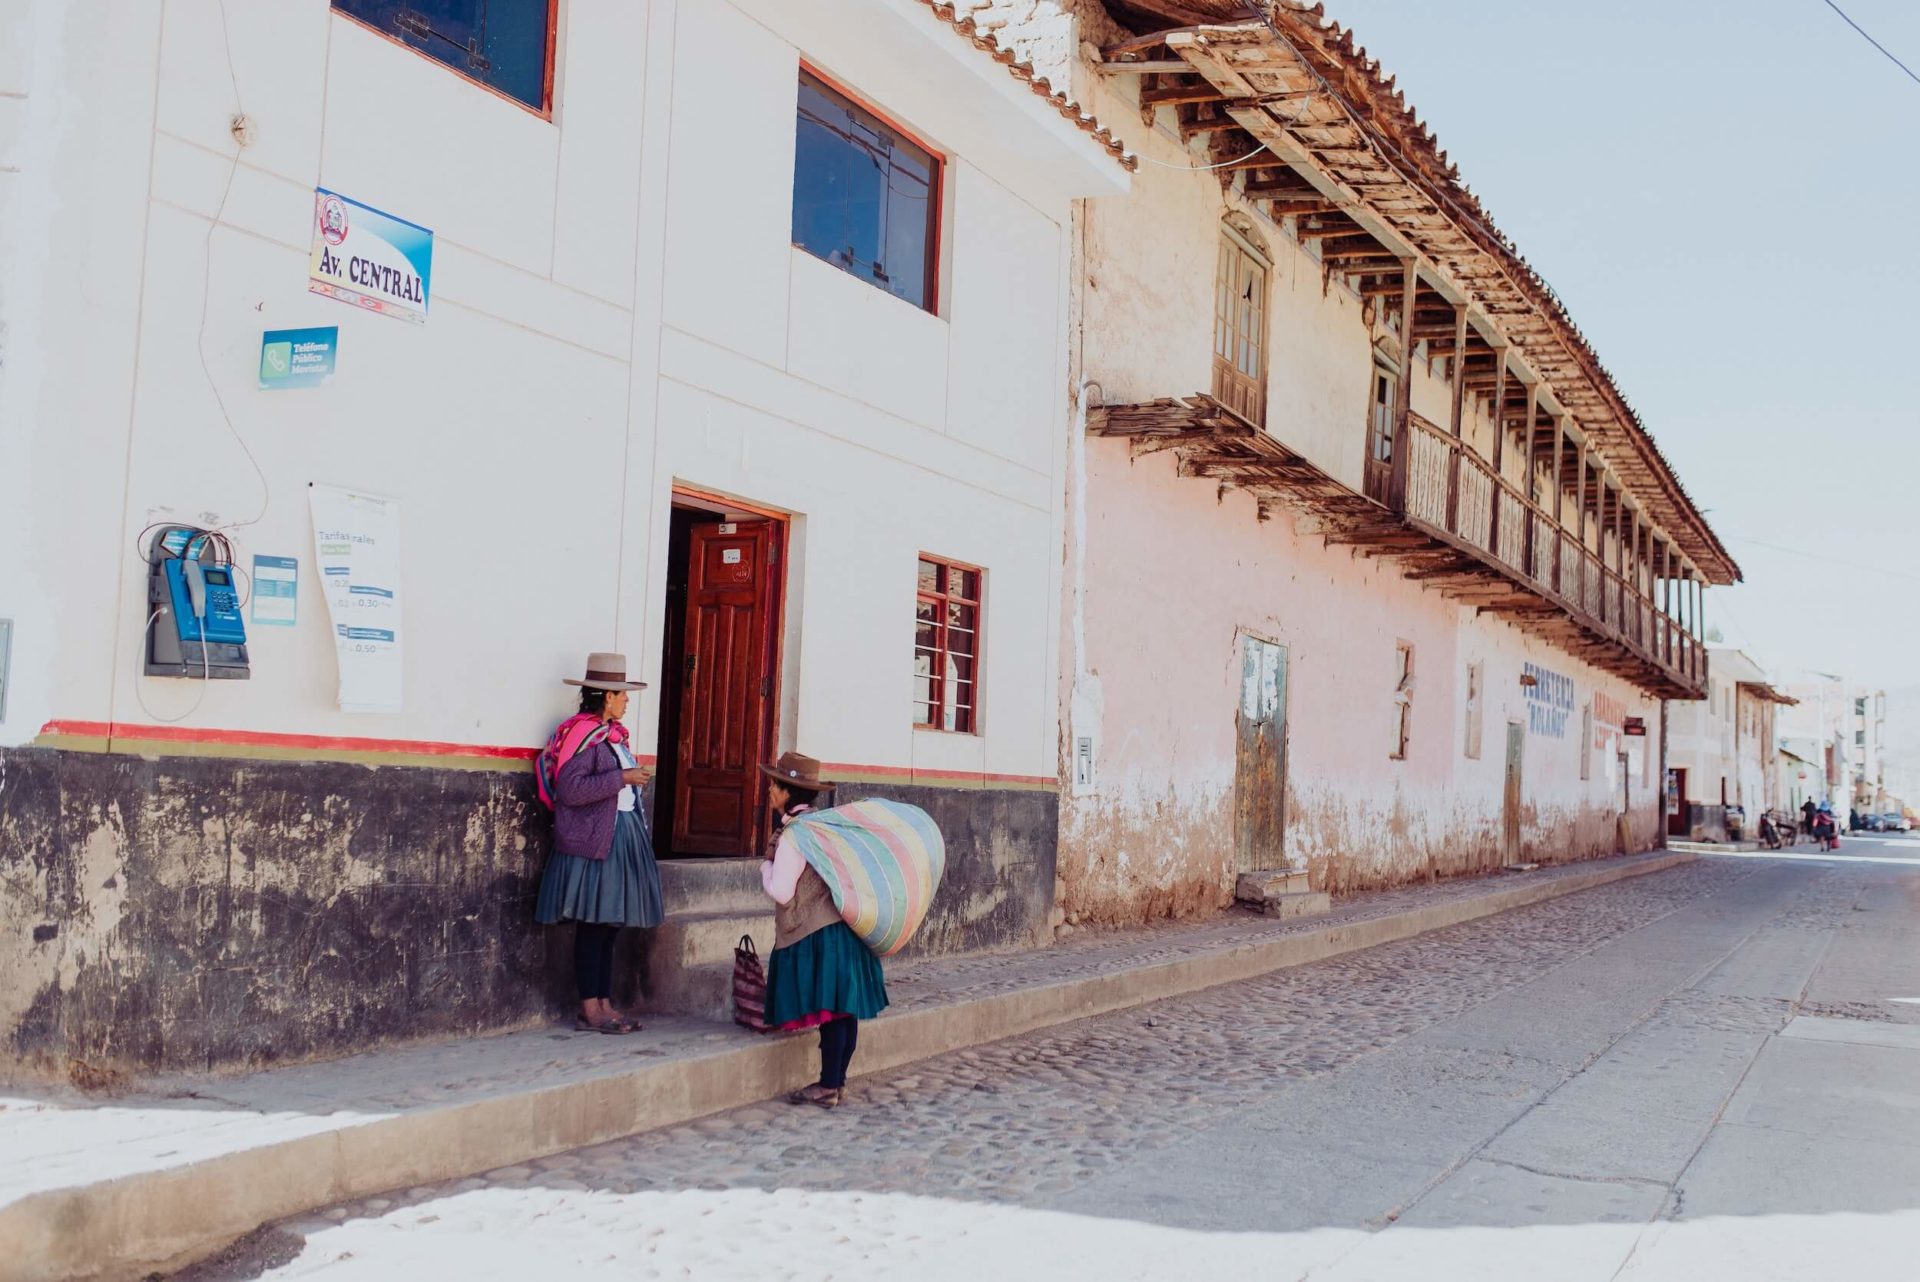 Southtraveler Podcast #16 - Freiwilligenarbeit in Peru 2